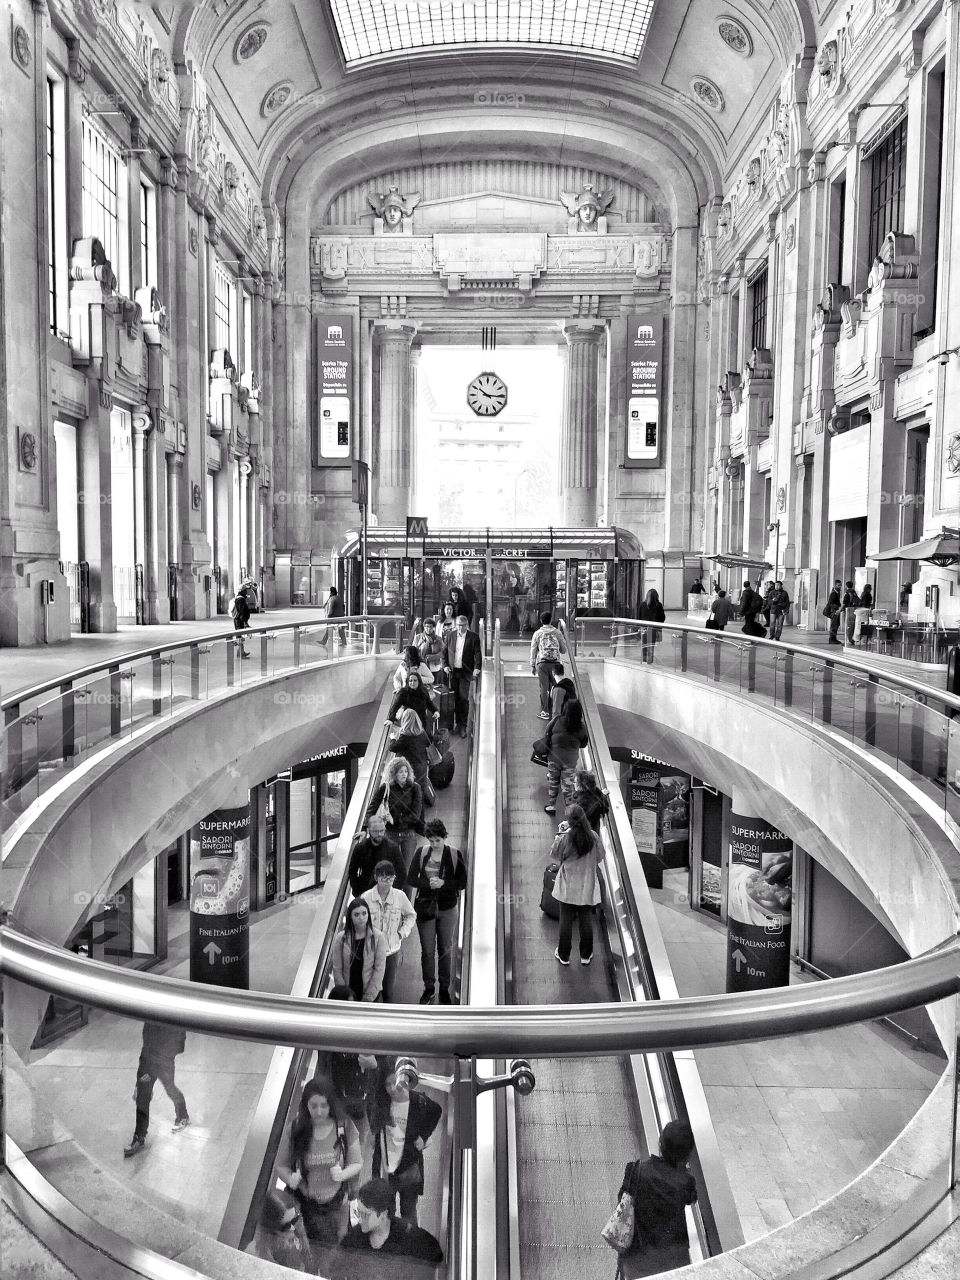 Milan Central Station